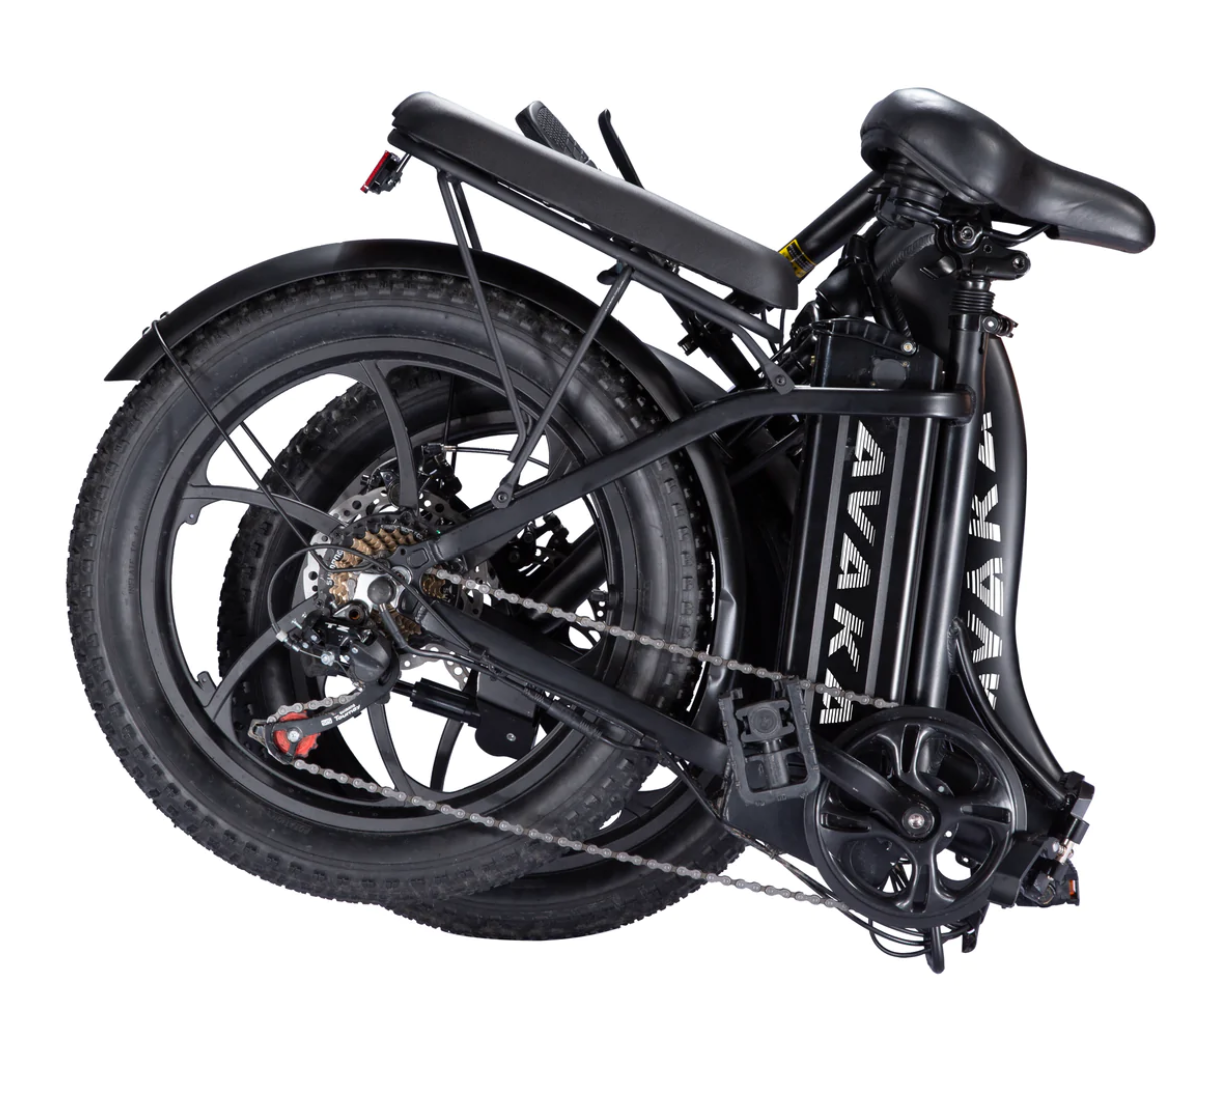 AVAKA BZ20 PLUS Electric Bike Foldable City Bike  500W Motor 100km Range